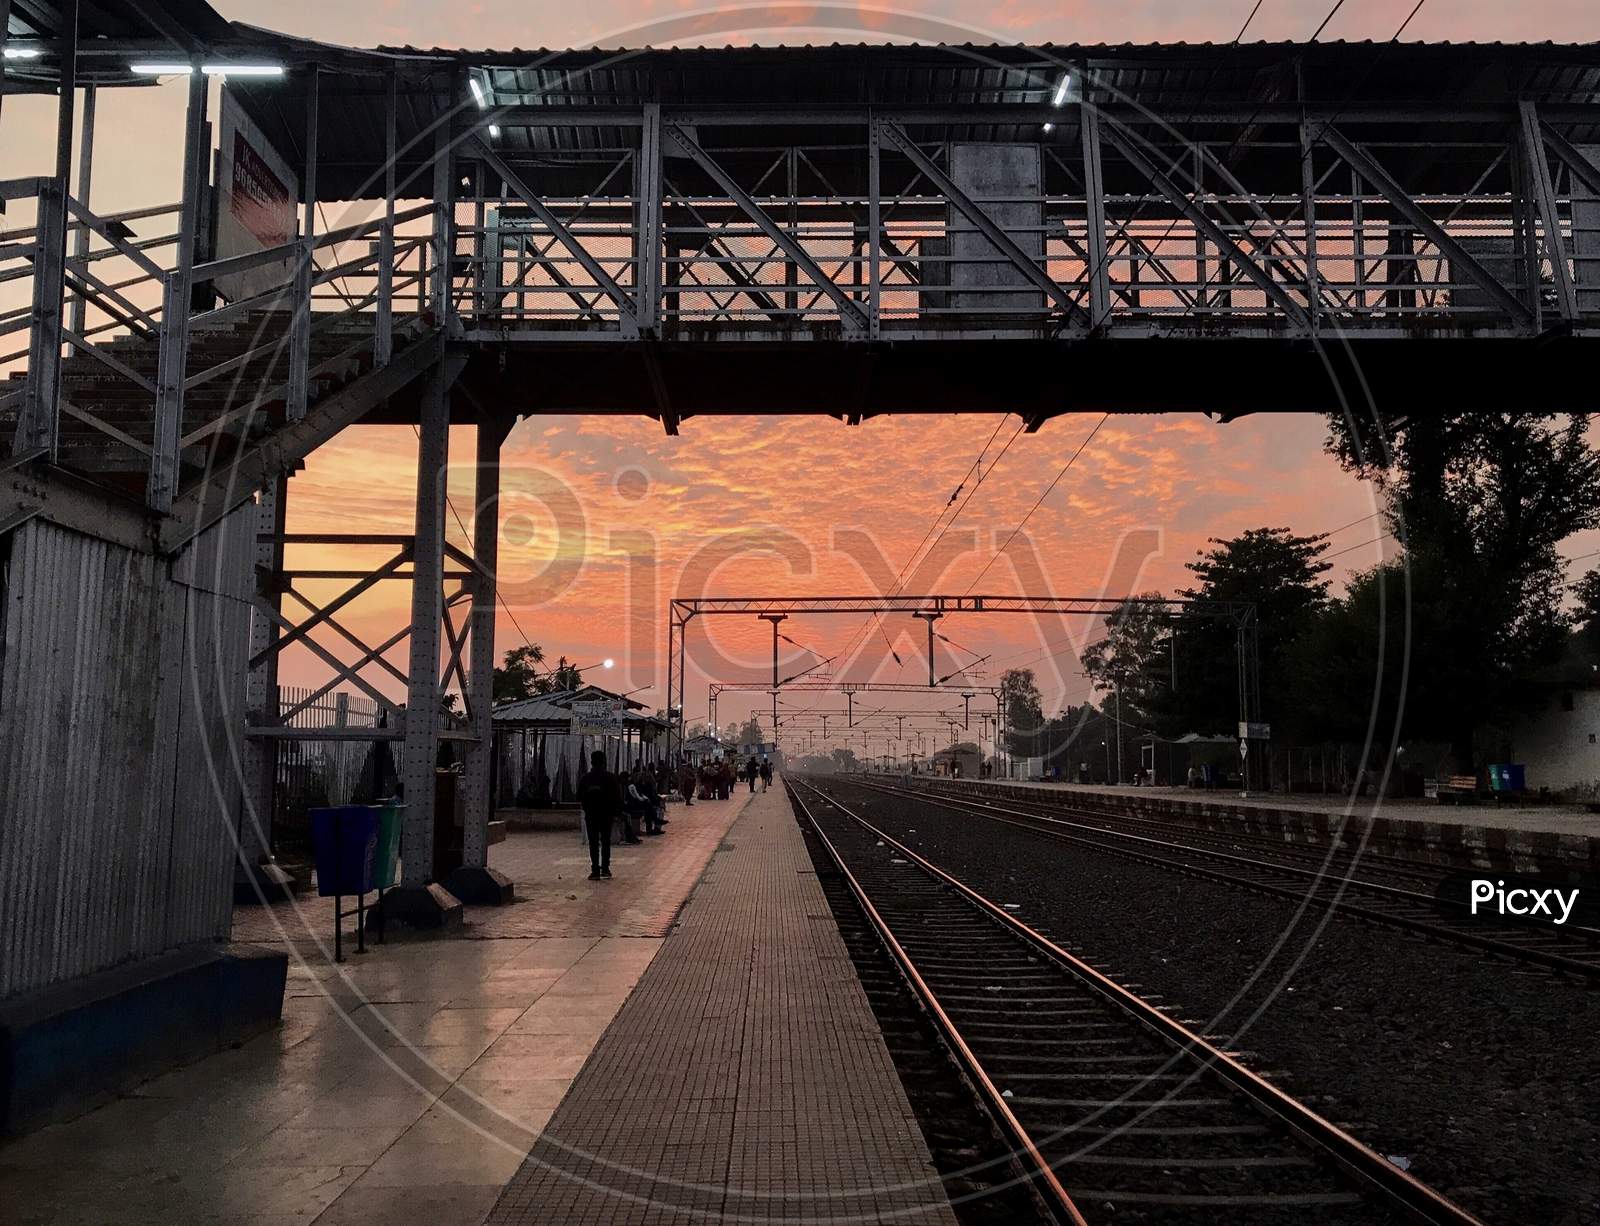 Indian Railway Station Platform Against Dramatic Sunset